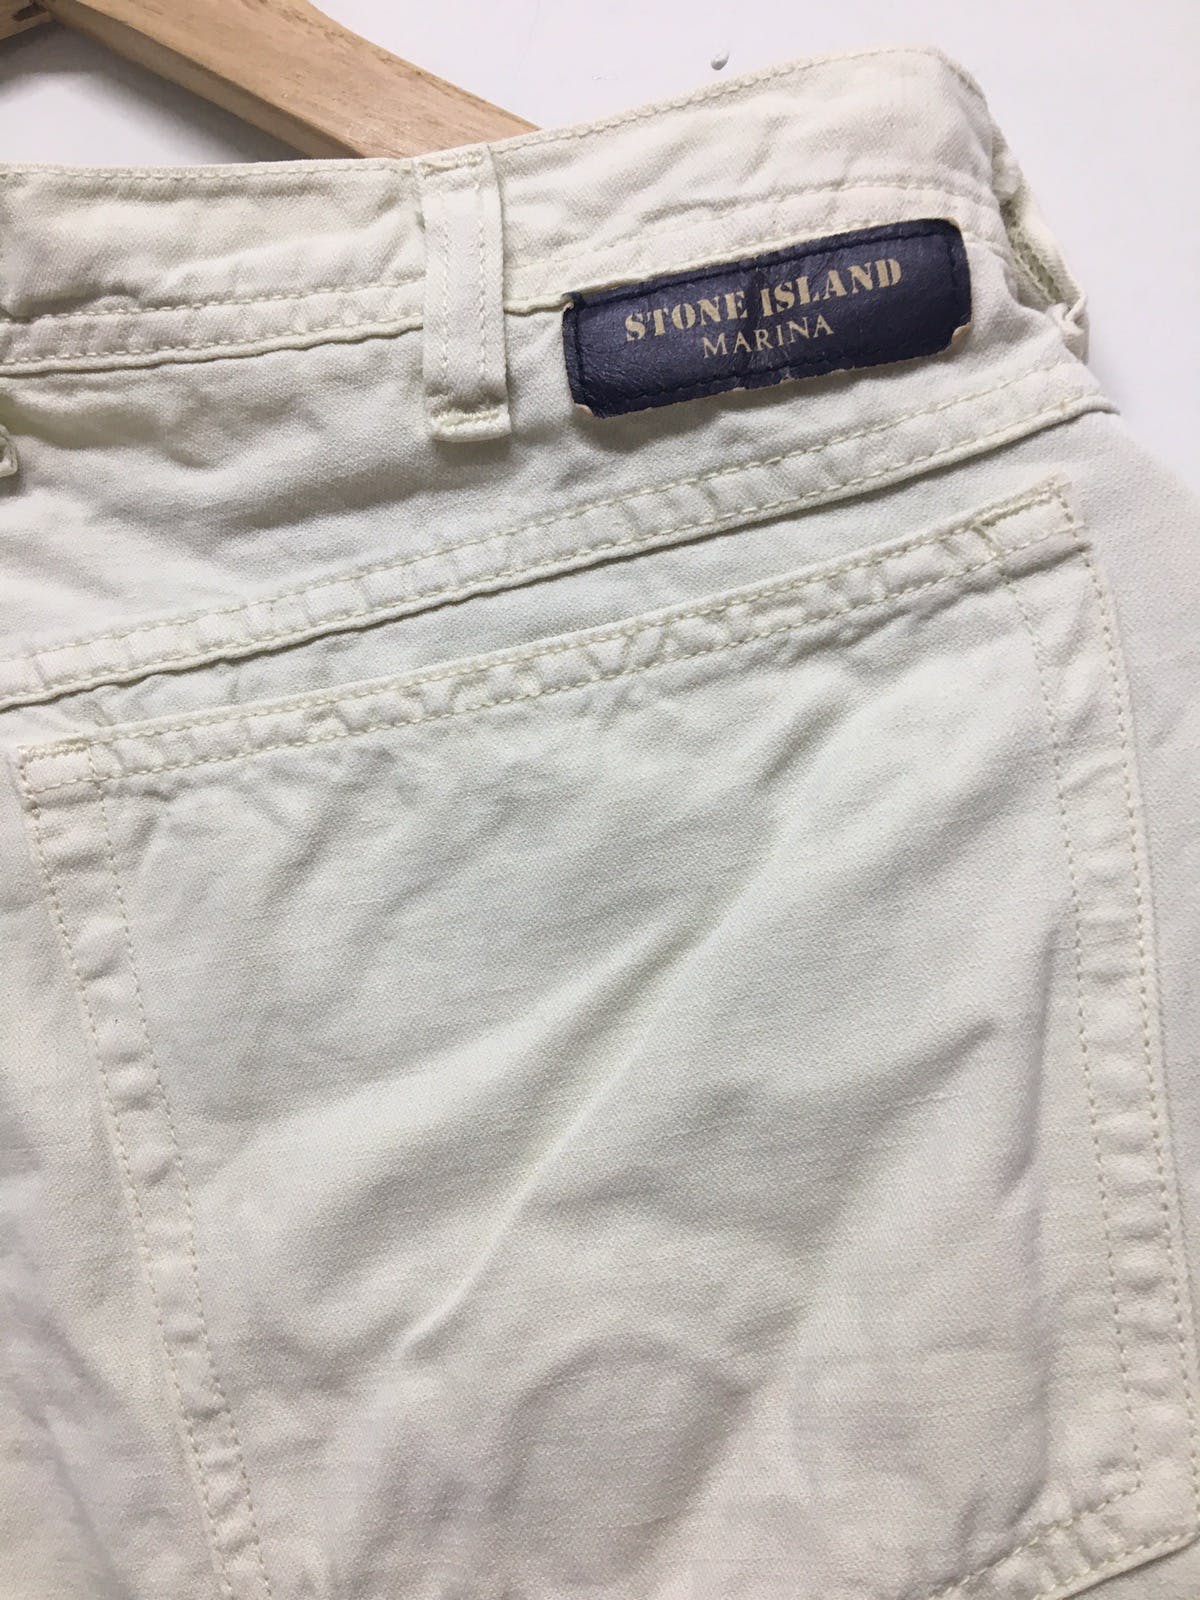 vintage stone island marina white pants - 8